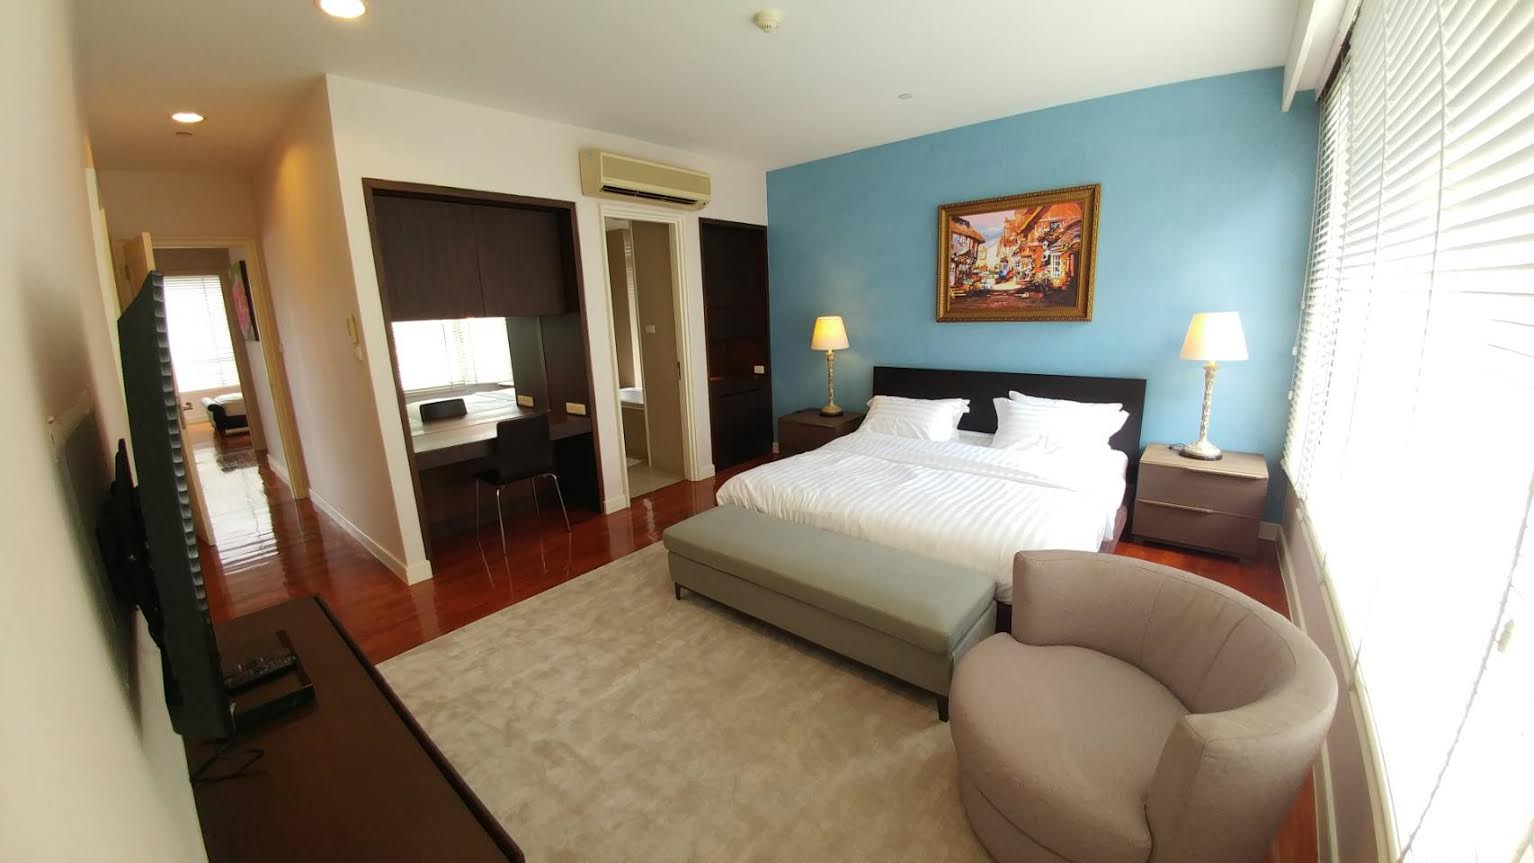 Hampton Thonglor 10 condo for rent, 3 bedrooms, 162 sq.m. Near Thonglor BTS.